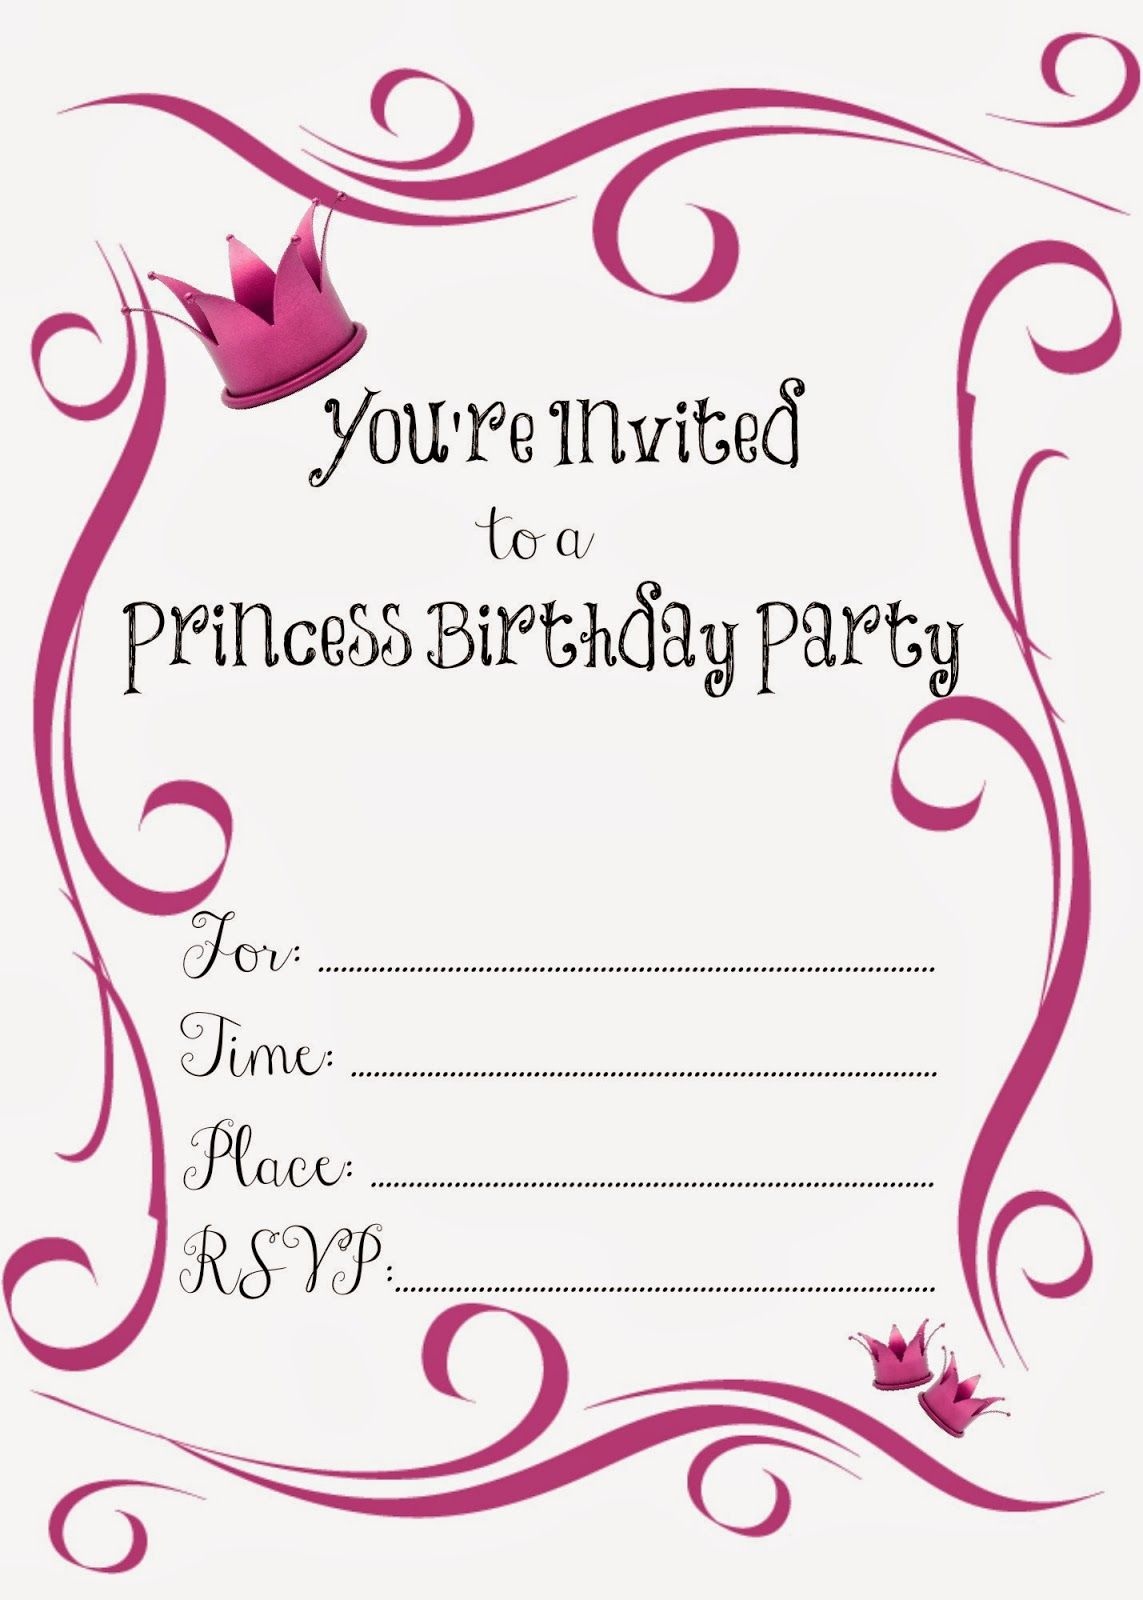 Free Printable Princess Birthday Party Invitations | Printables - Free Printable Birthday Invitations Pinterest